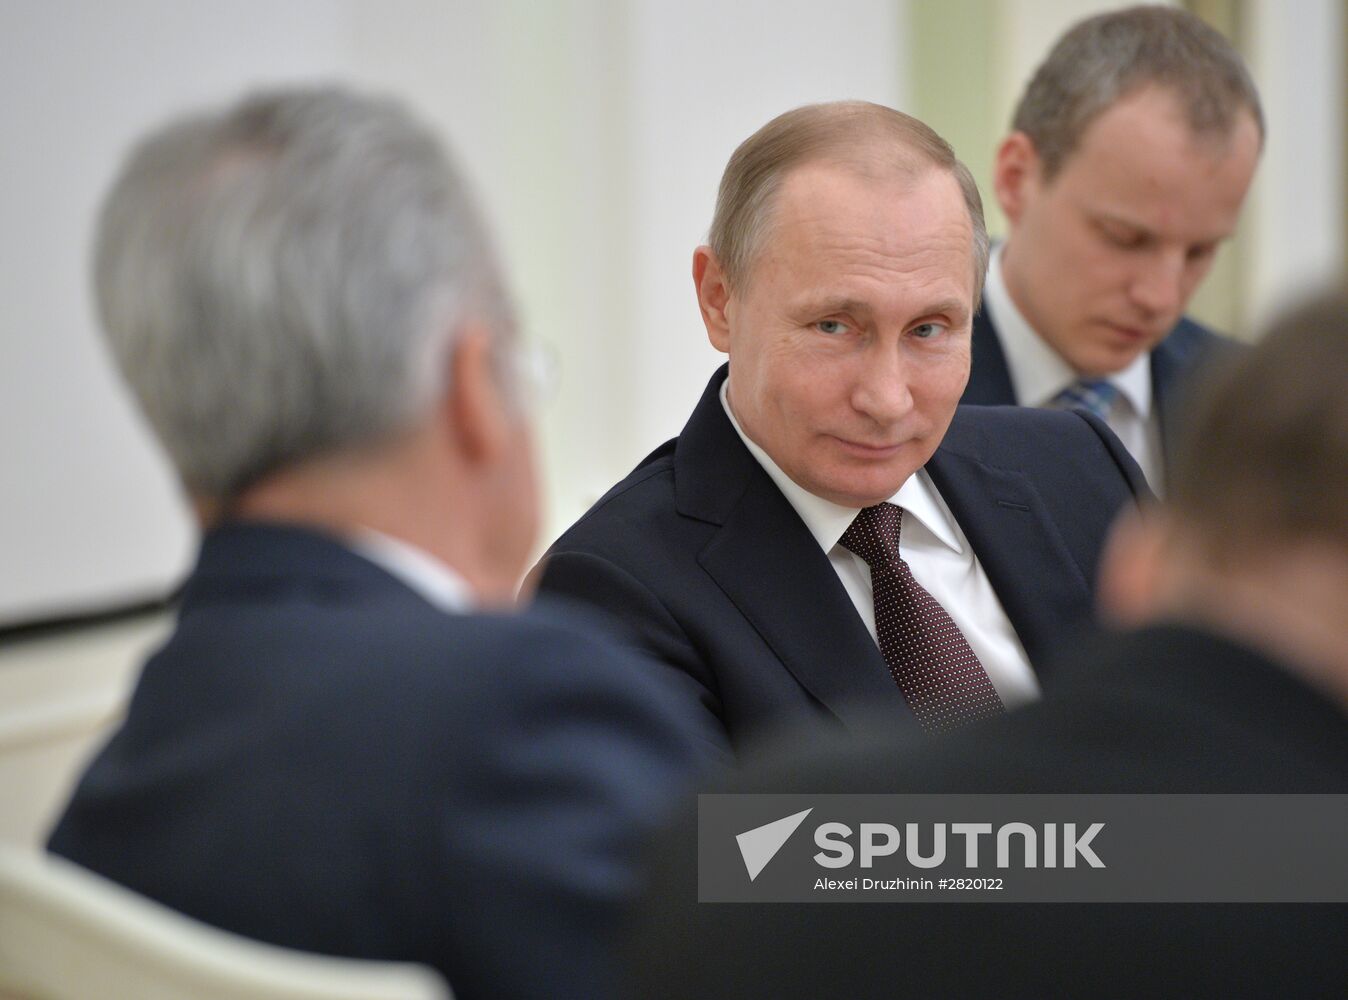 President Vladimir Putin meets with President of Austria Heinz Fischer